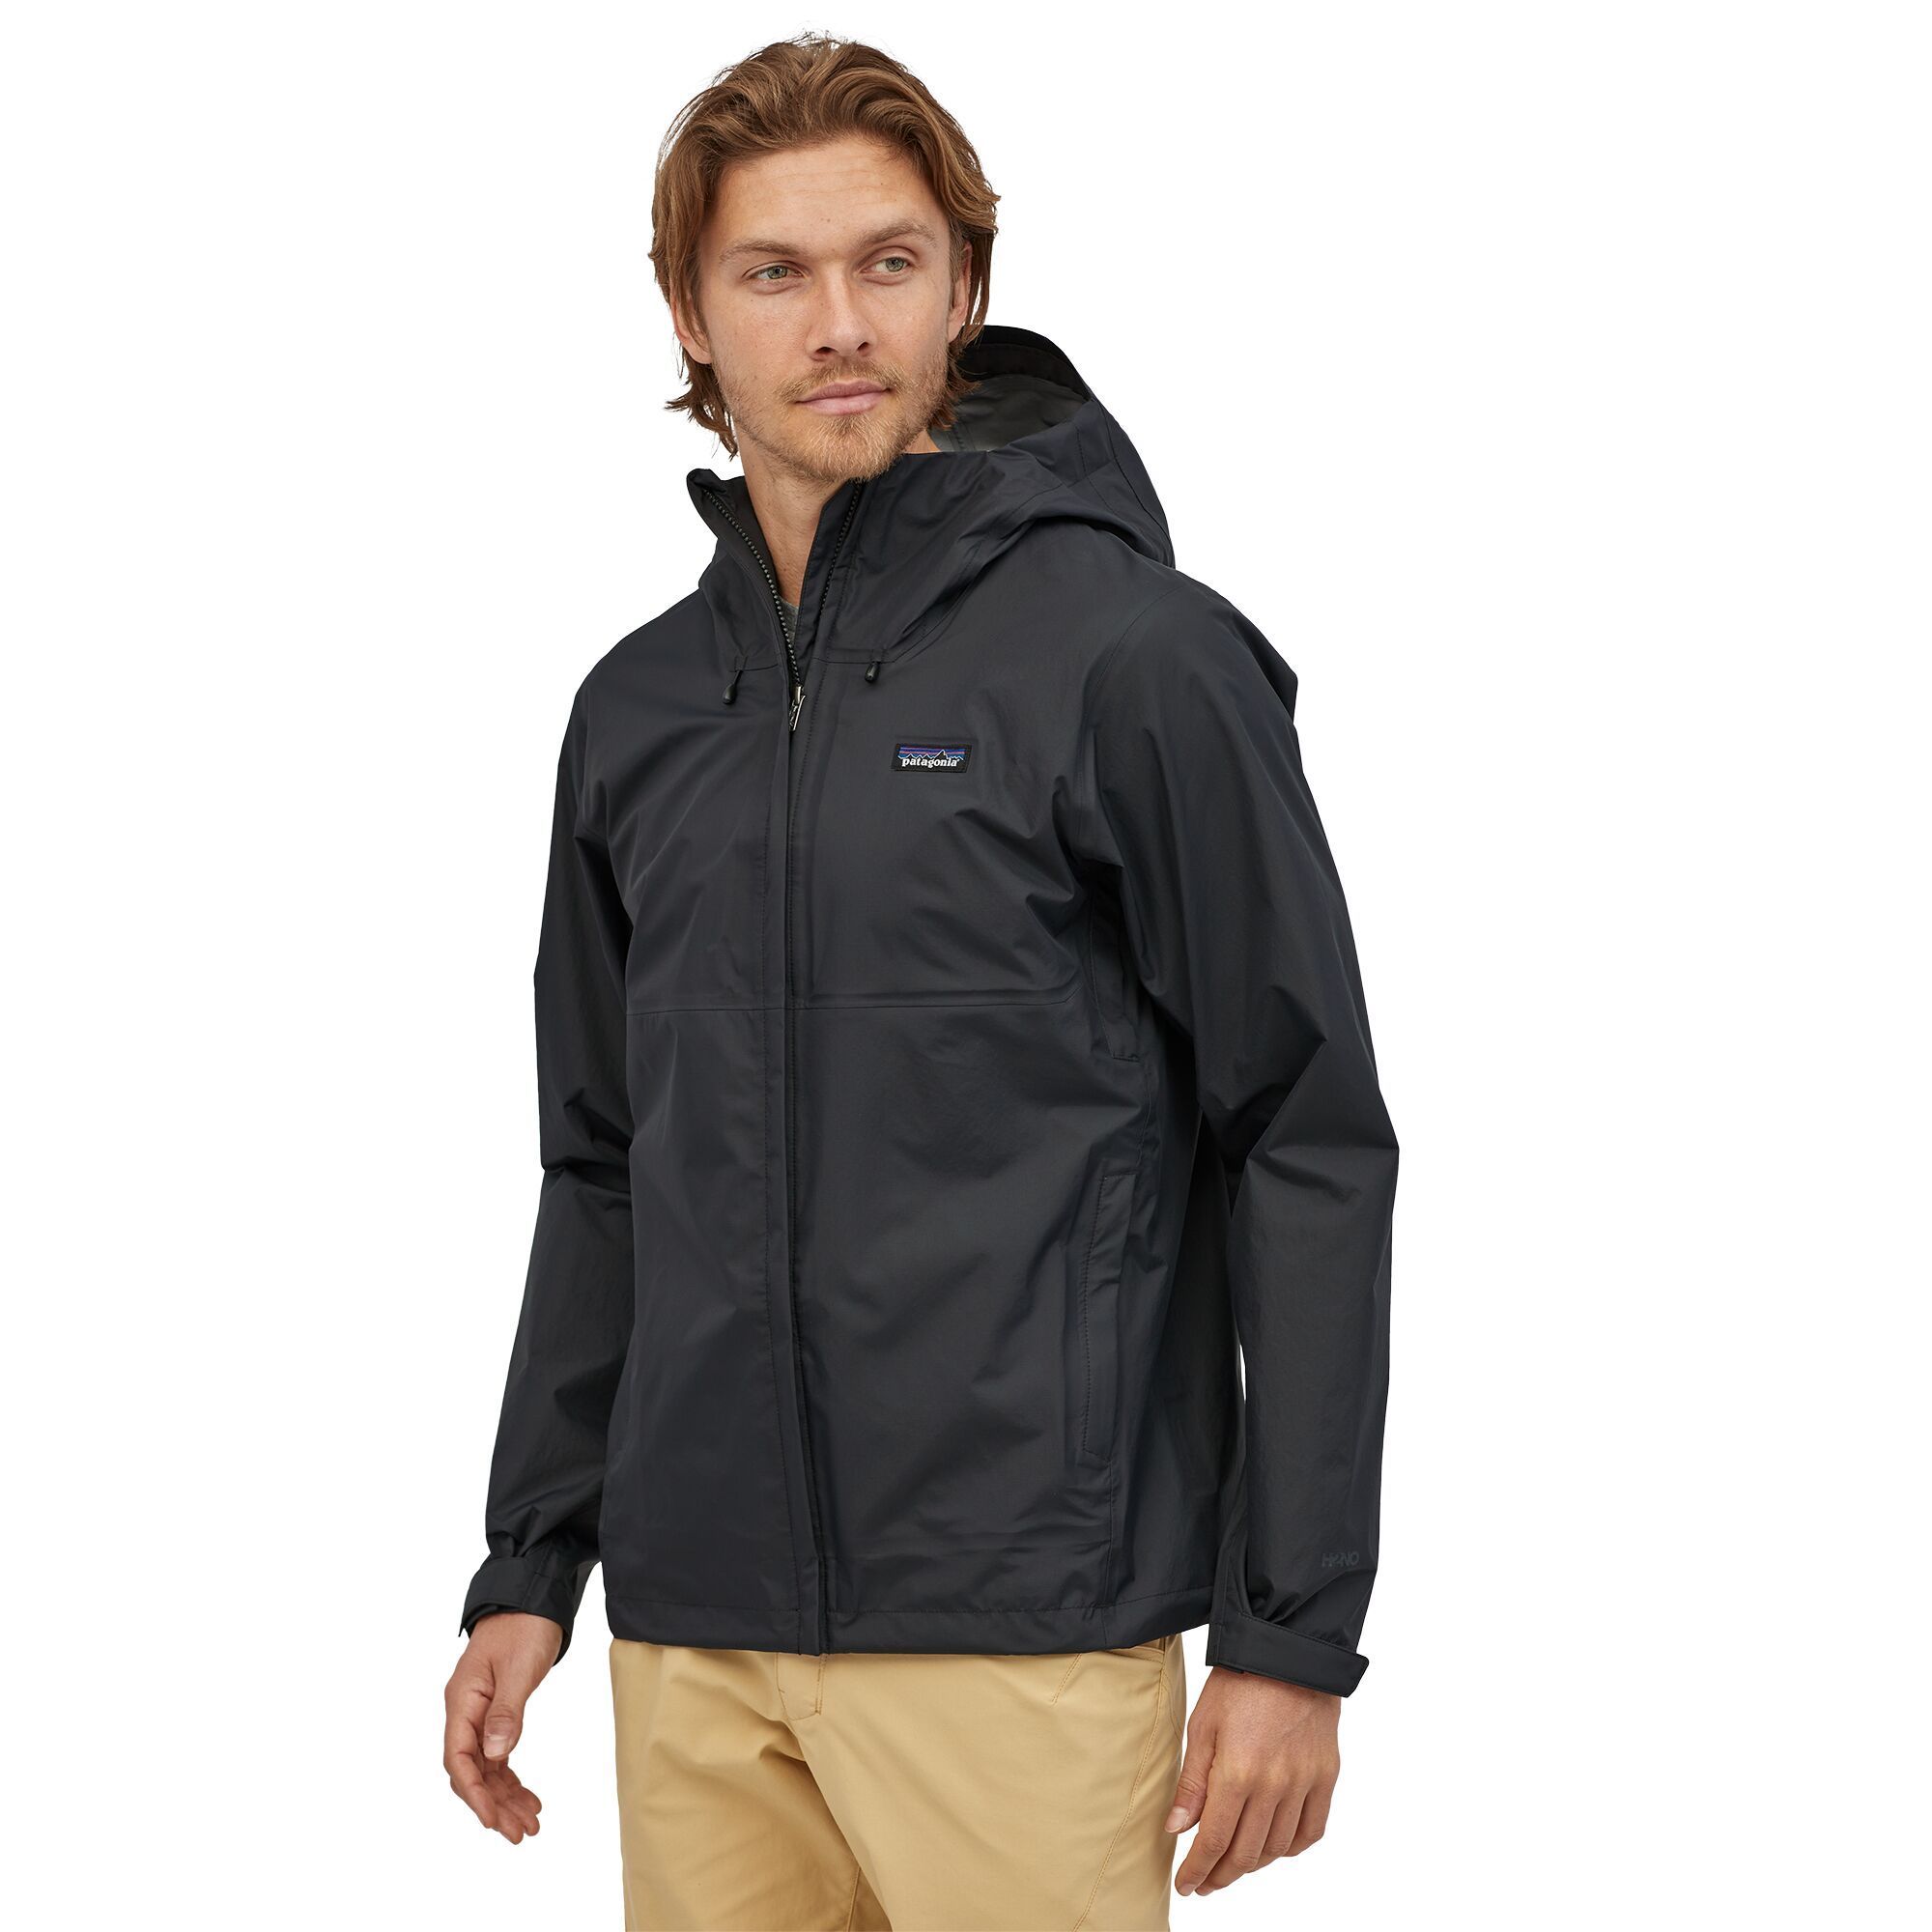 Patagonia Men's Torrentshell 3L Jacket - 100% Recycled Nylon, Black / S